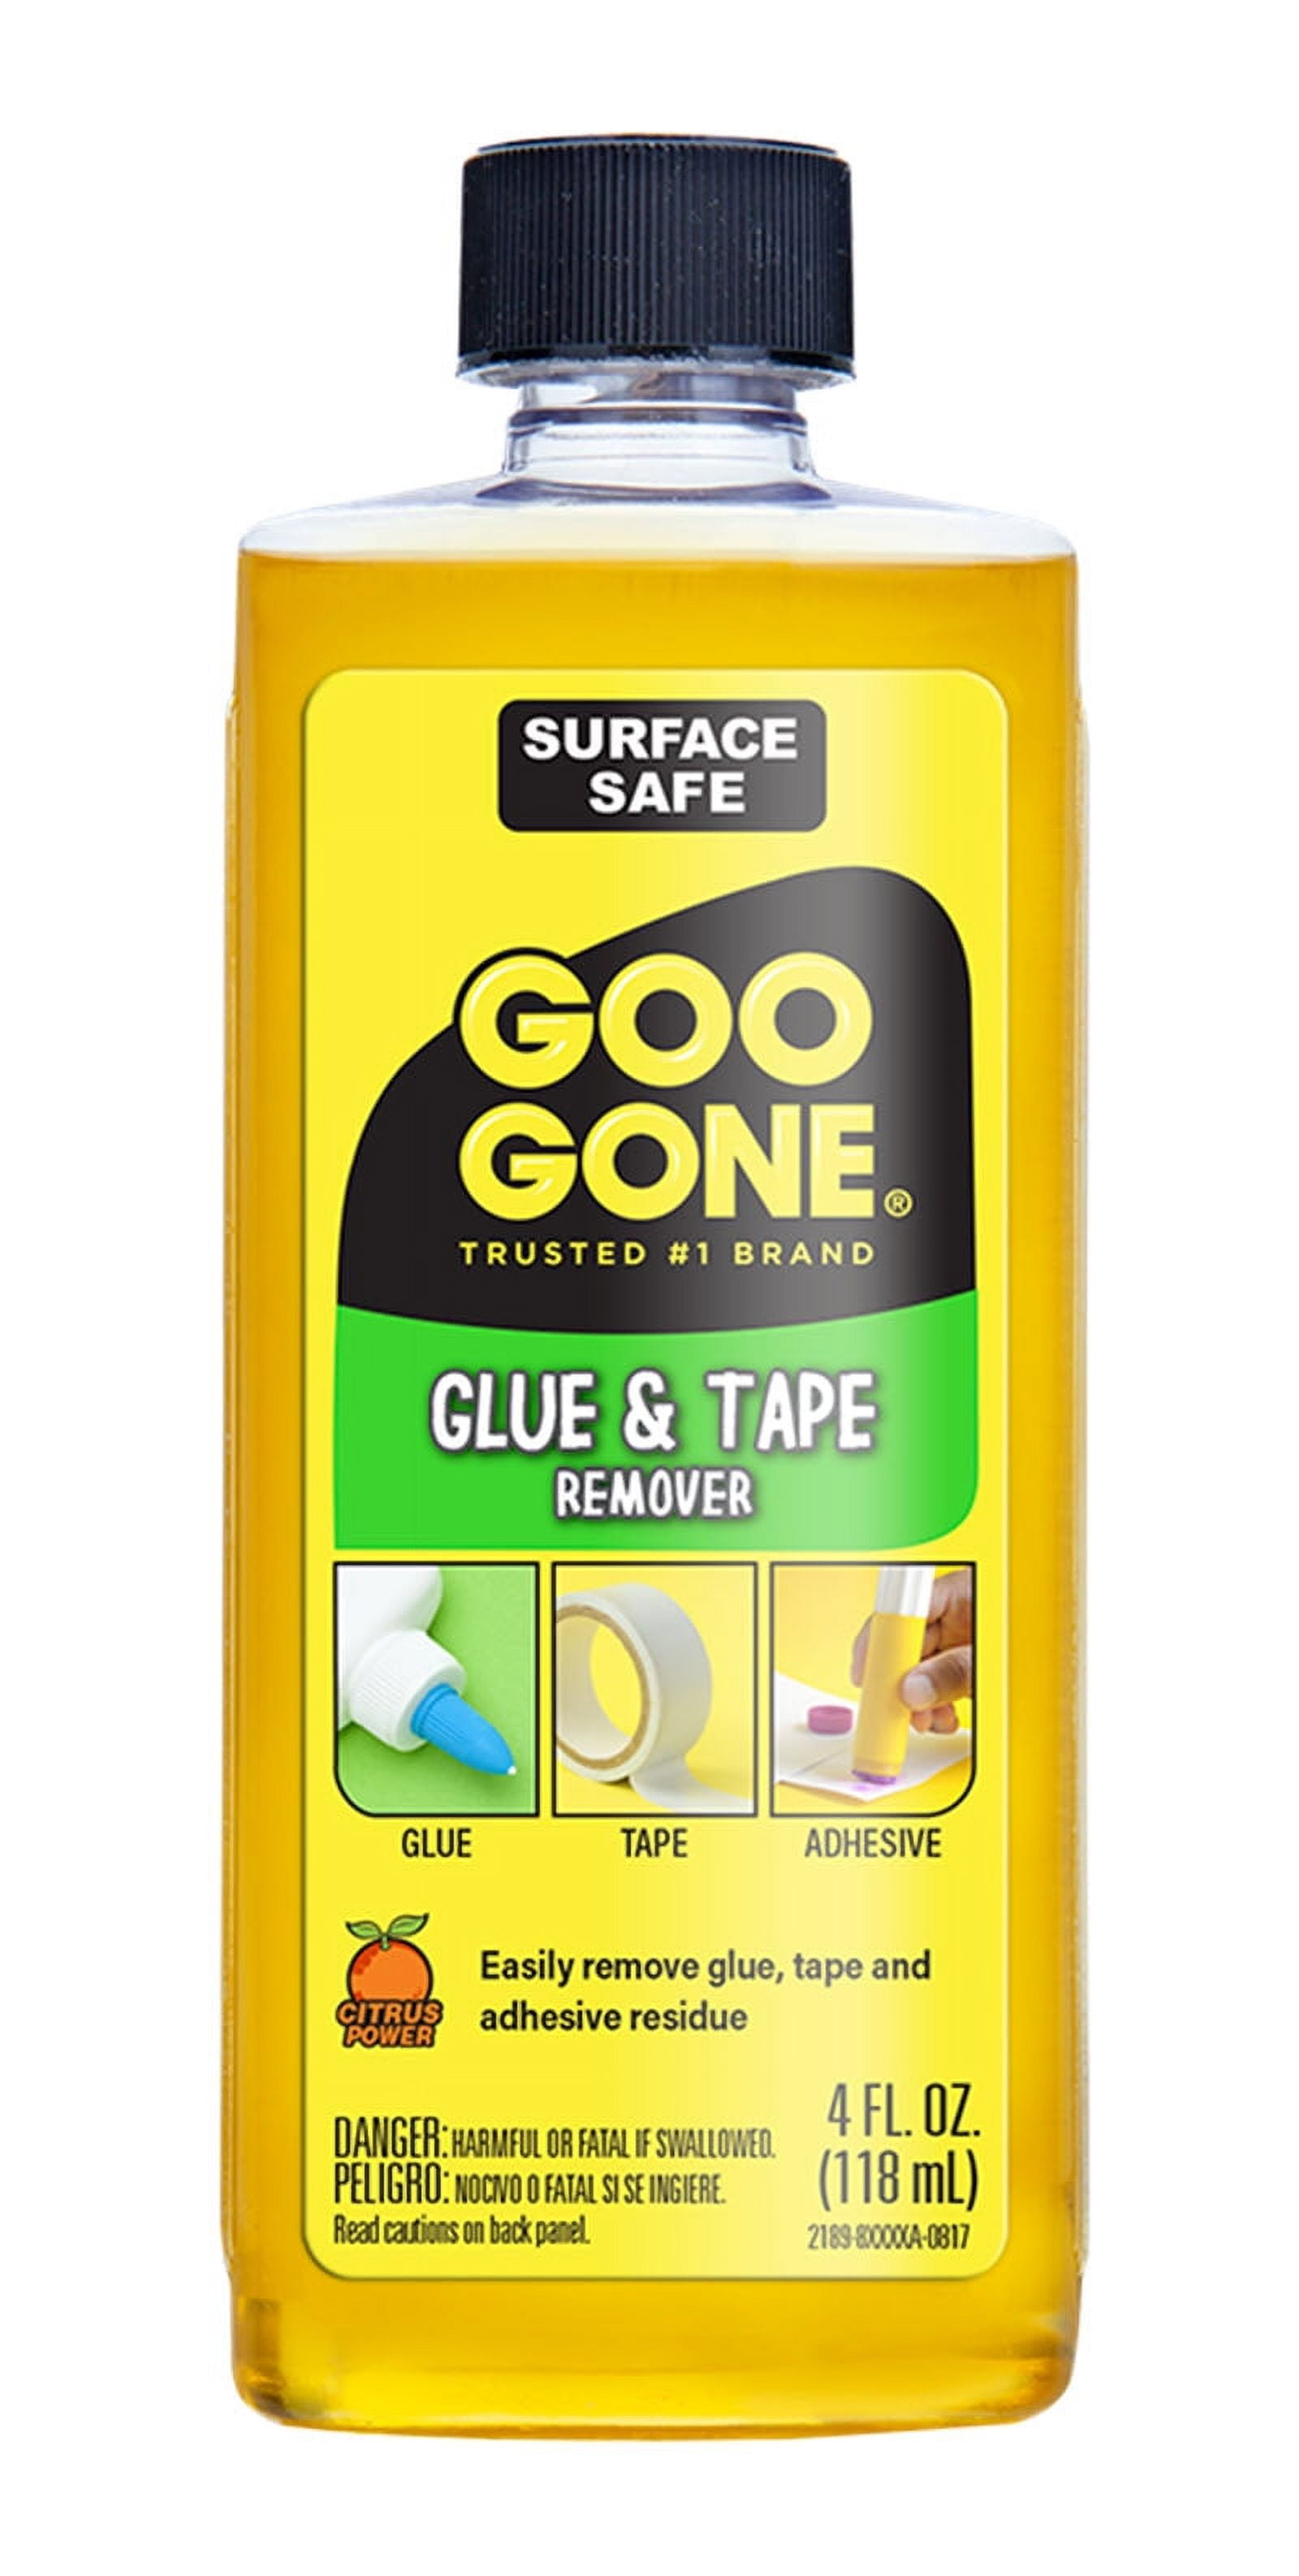 Goo Gone Pro-Power Pump Spray, 16 oz